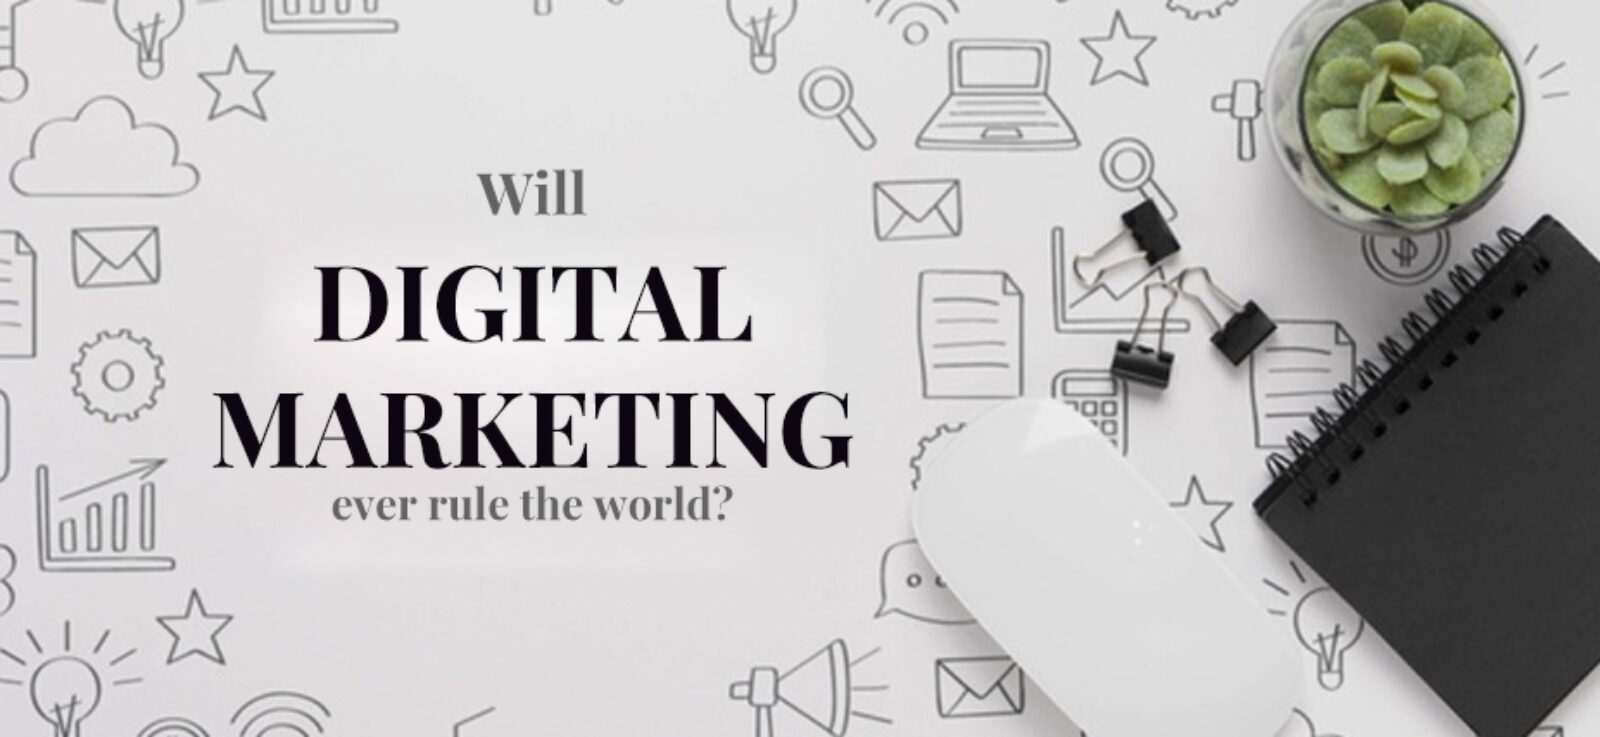 Increase in scope of digital marketing - Will digital marketing ever rule the world?